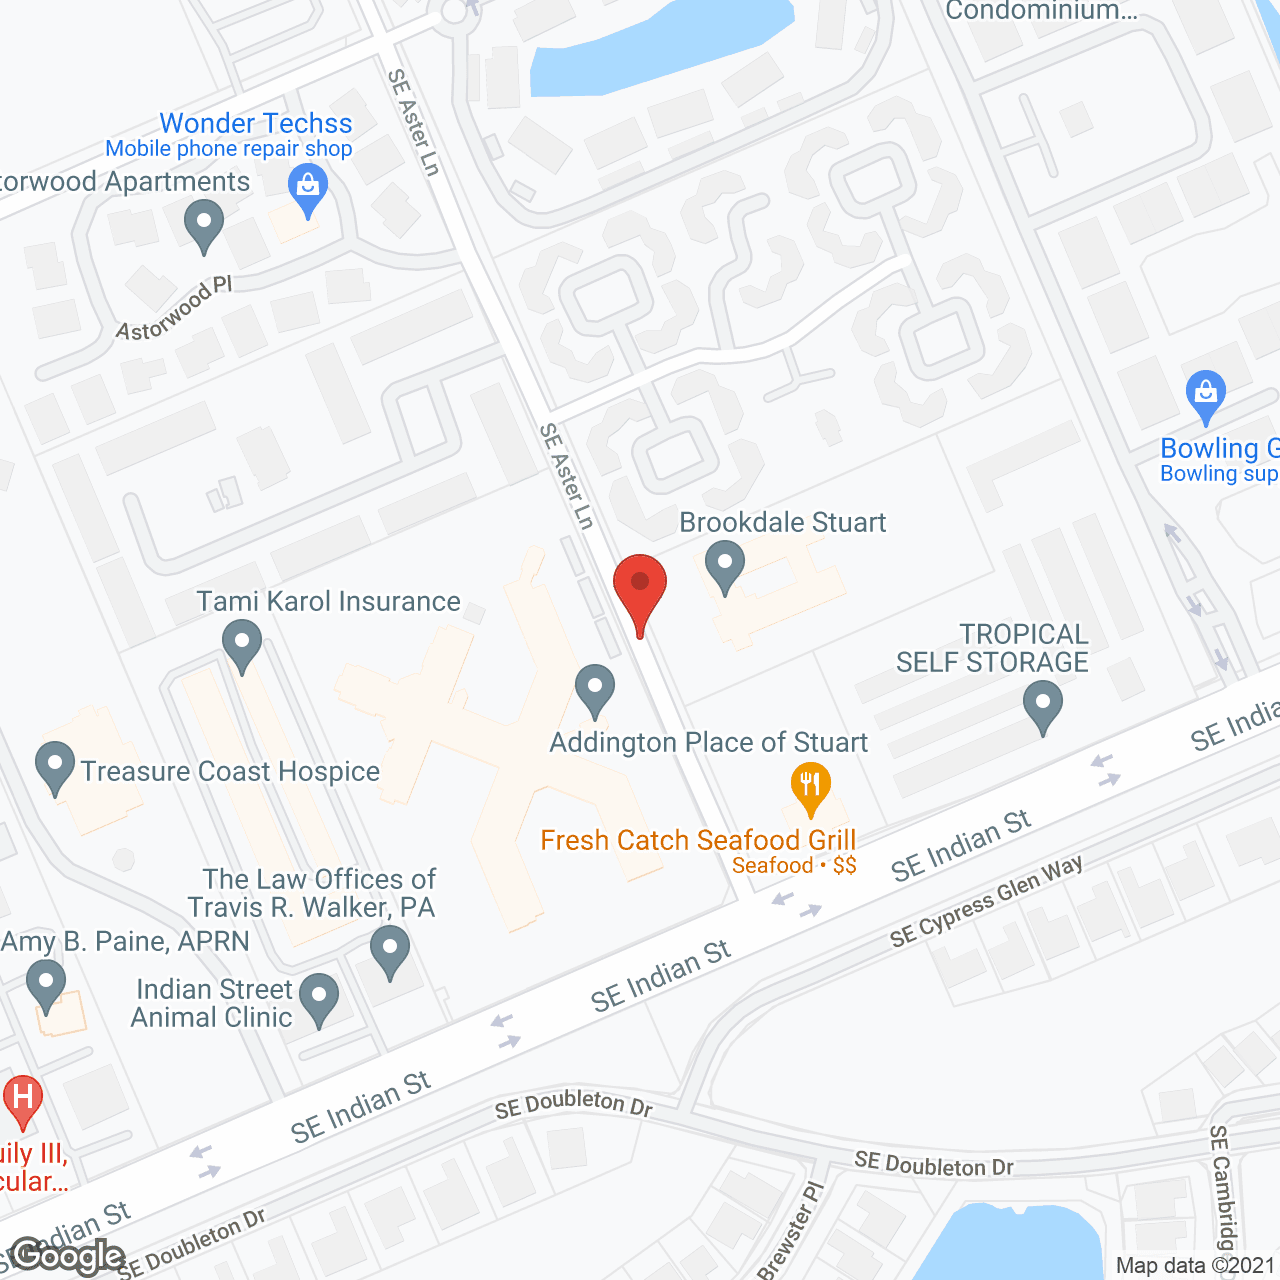 Addington Place of Stuart in google map